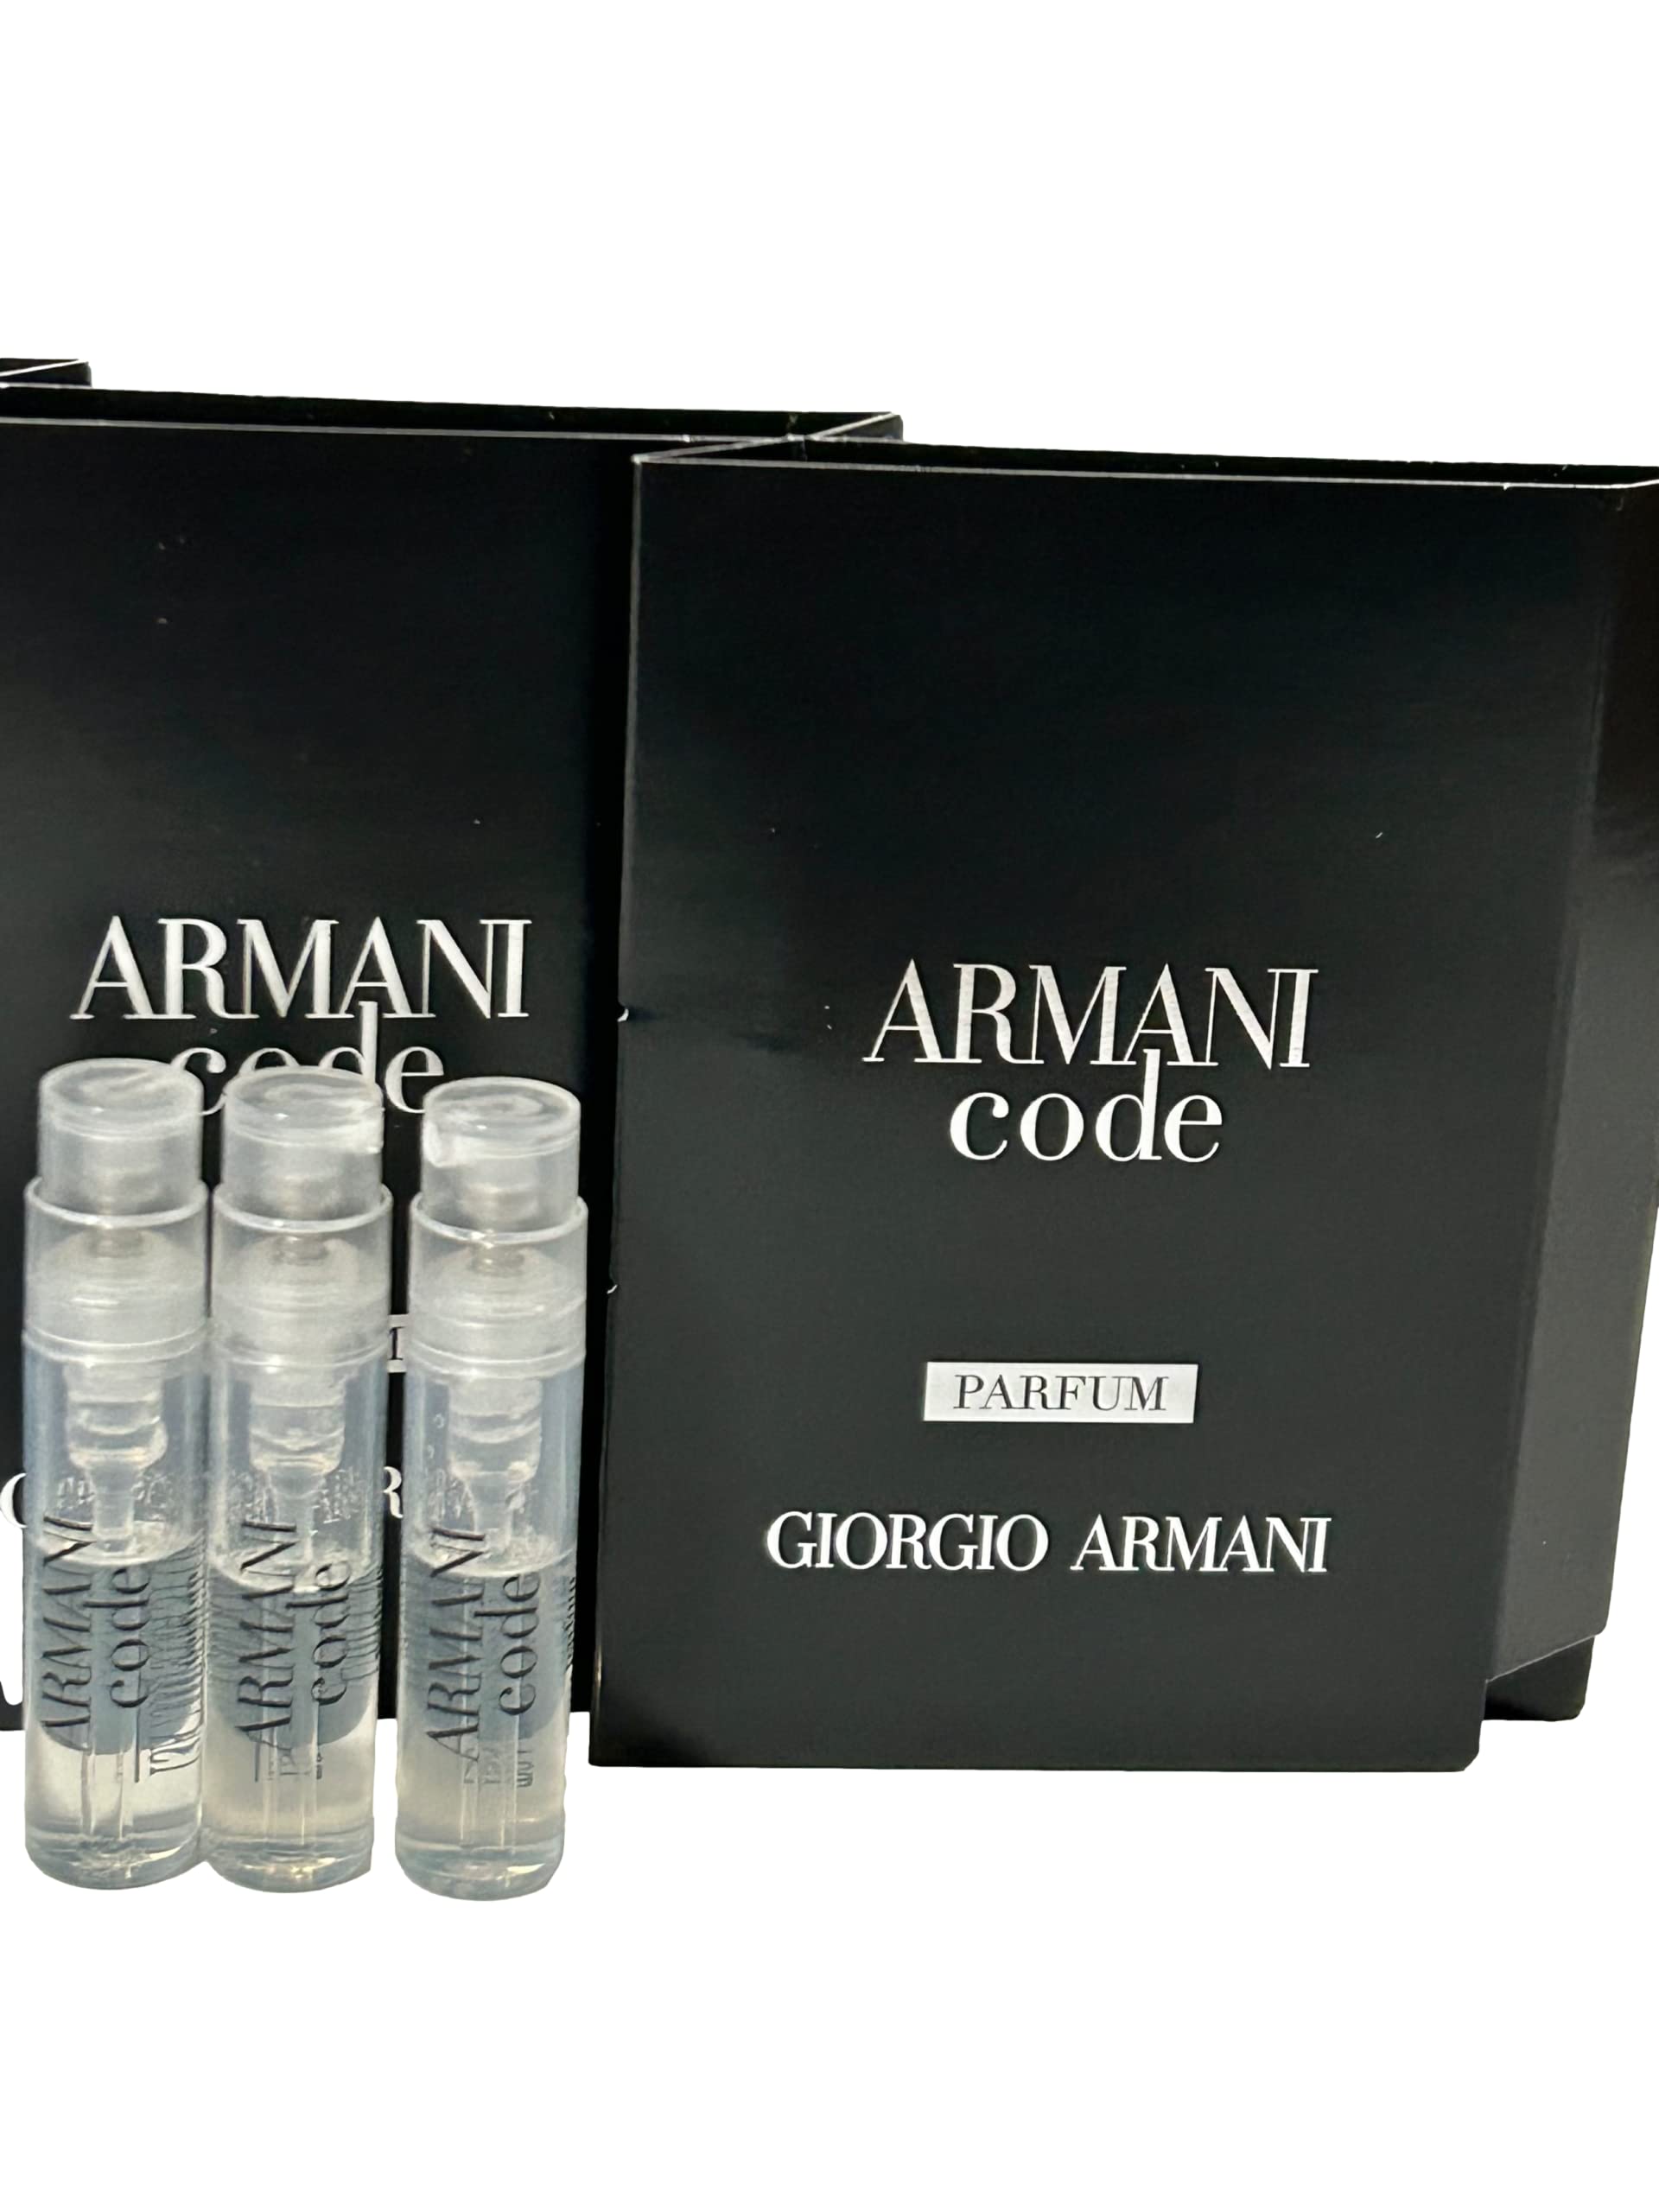 GIORGIO ARMANI Men ARMANI CODE PARFUM Sample Spray Perfume 1.2ml /.04 oz - 3 PCS set